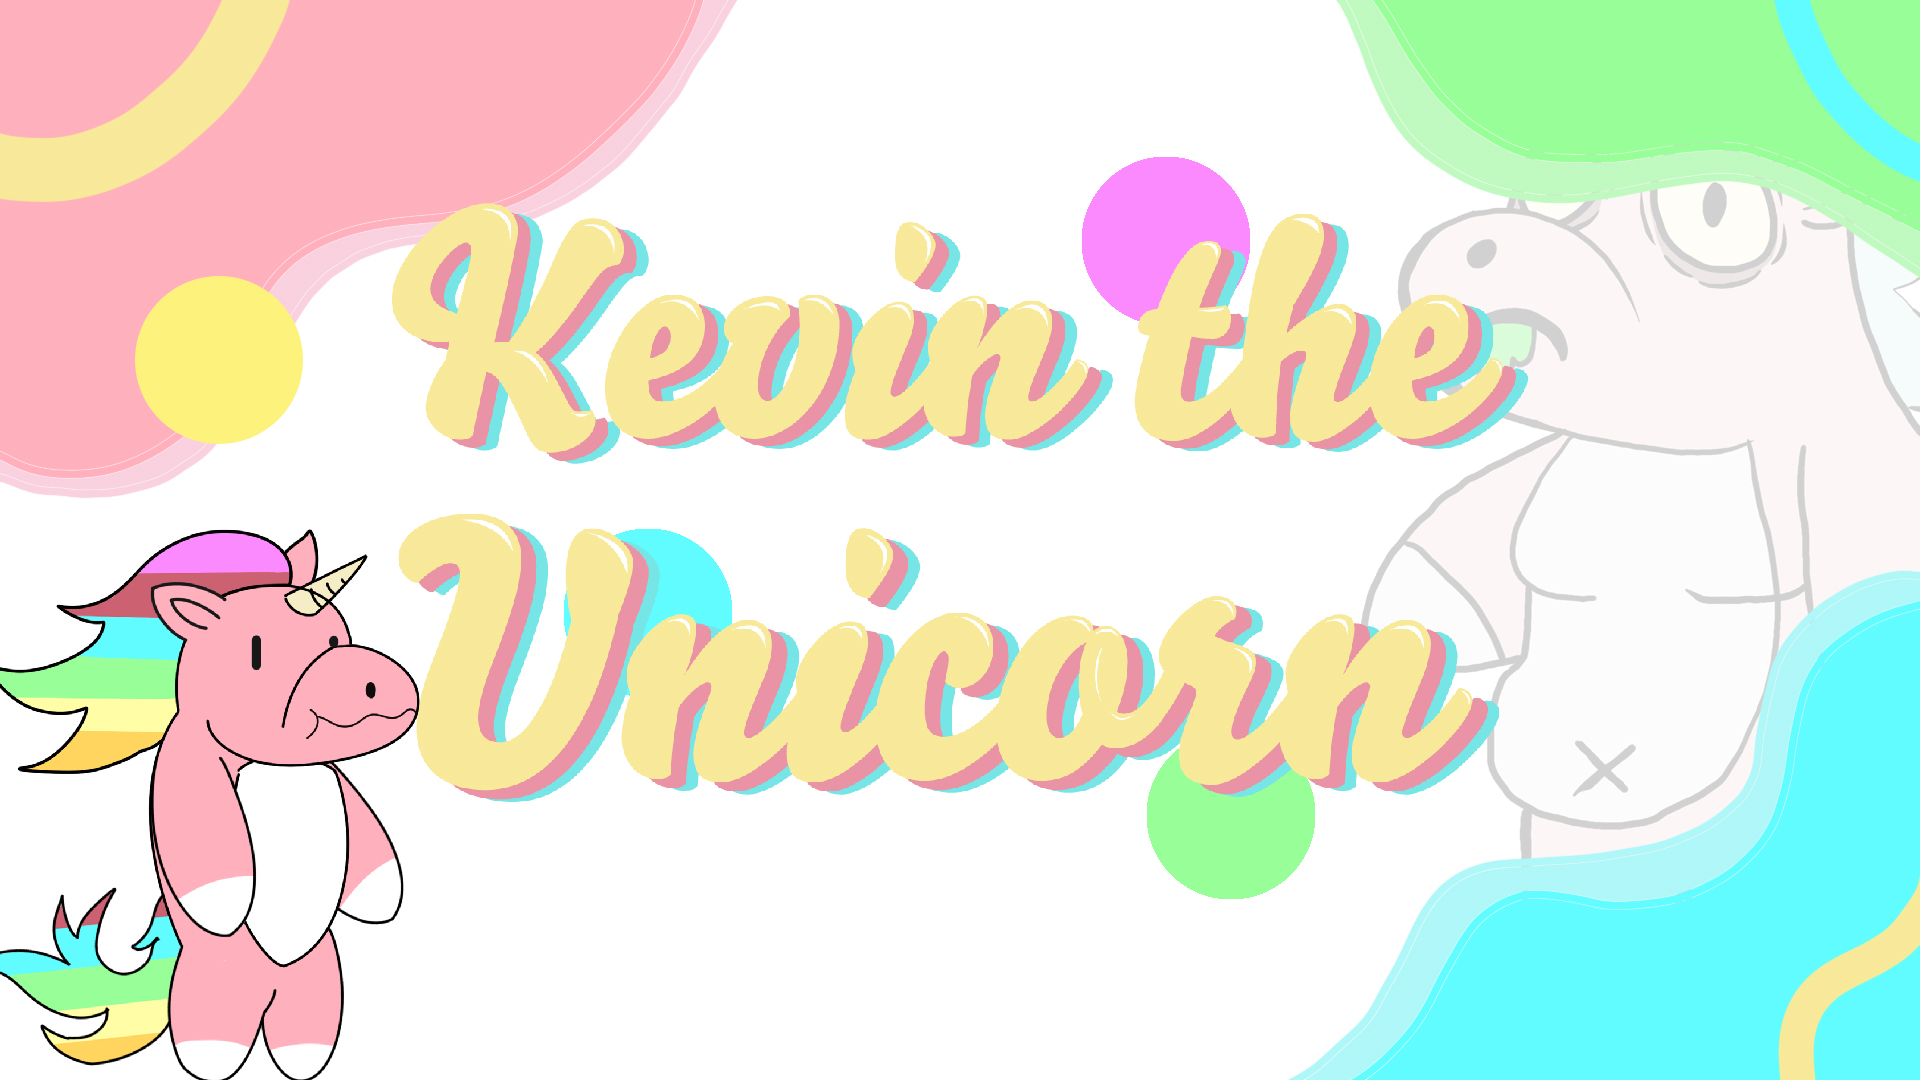 Kevin the Unicorn